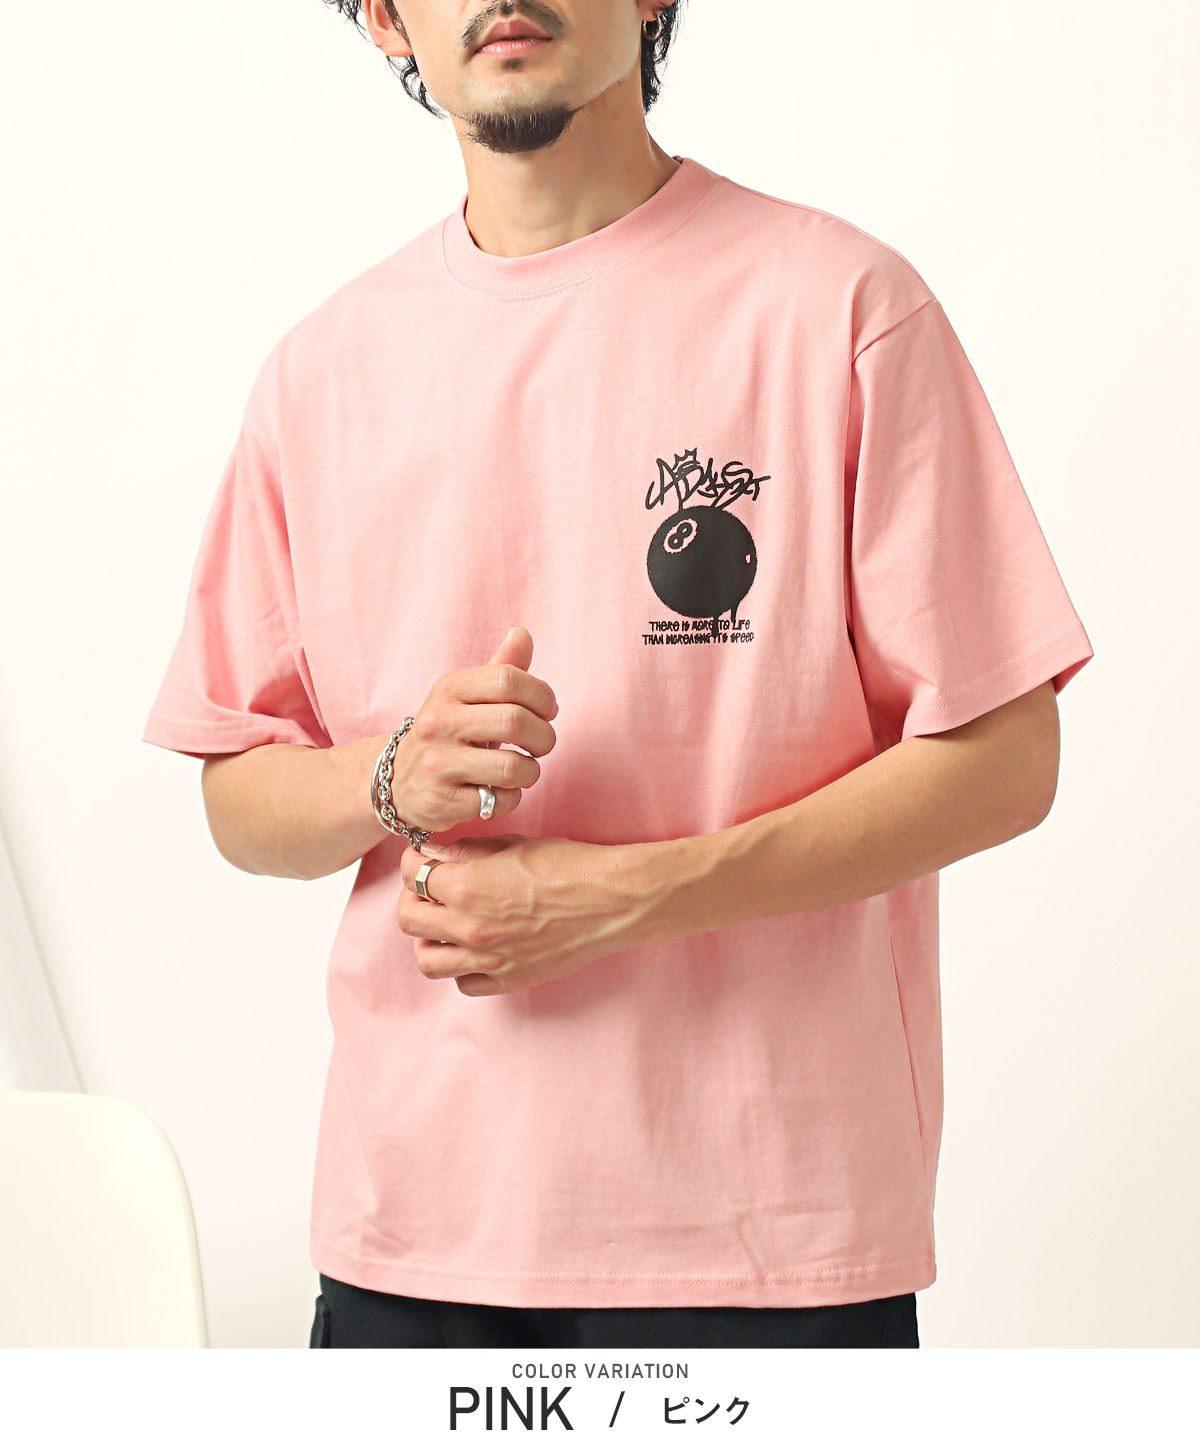 Tシャツ 半袖 メンズ レディース 落書き風 プリント ビリヤード グラフィティ ストリート 韓国